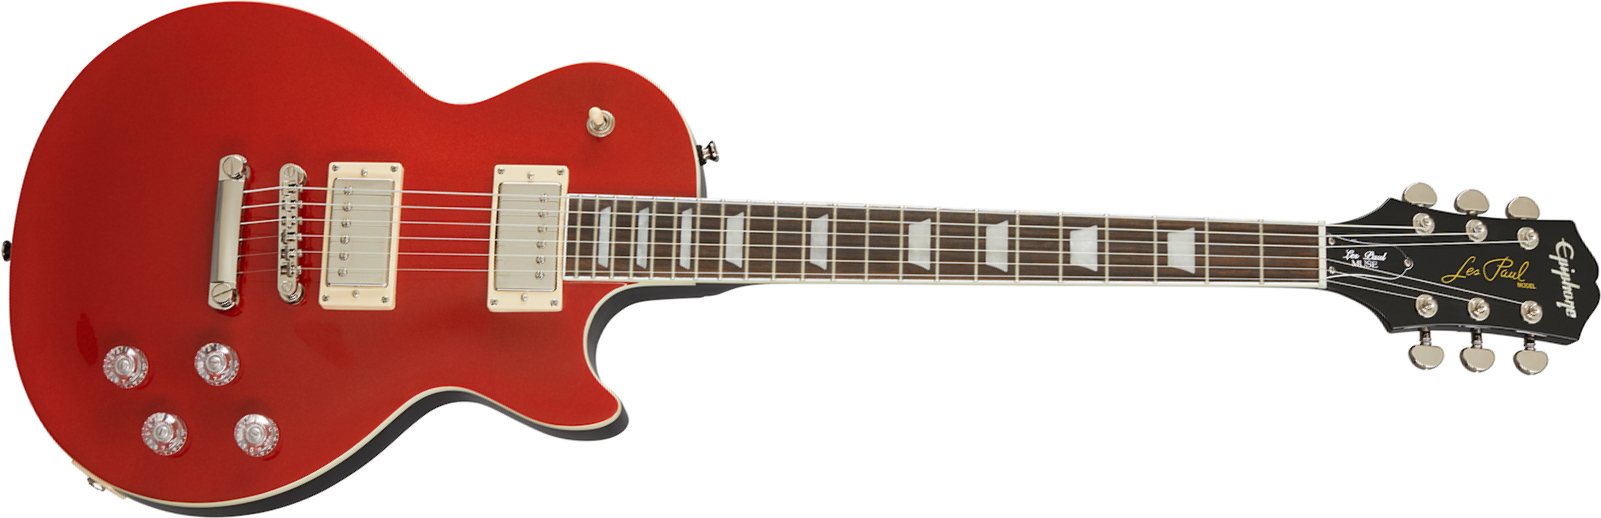 Epiphone Les Paul Muse Modern 2h Ht Lau - Scarlet Red Metallic - Single cut electric guitar - Main picture